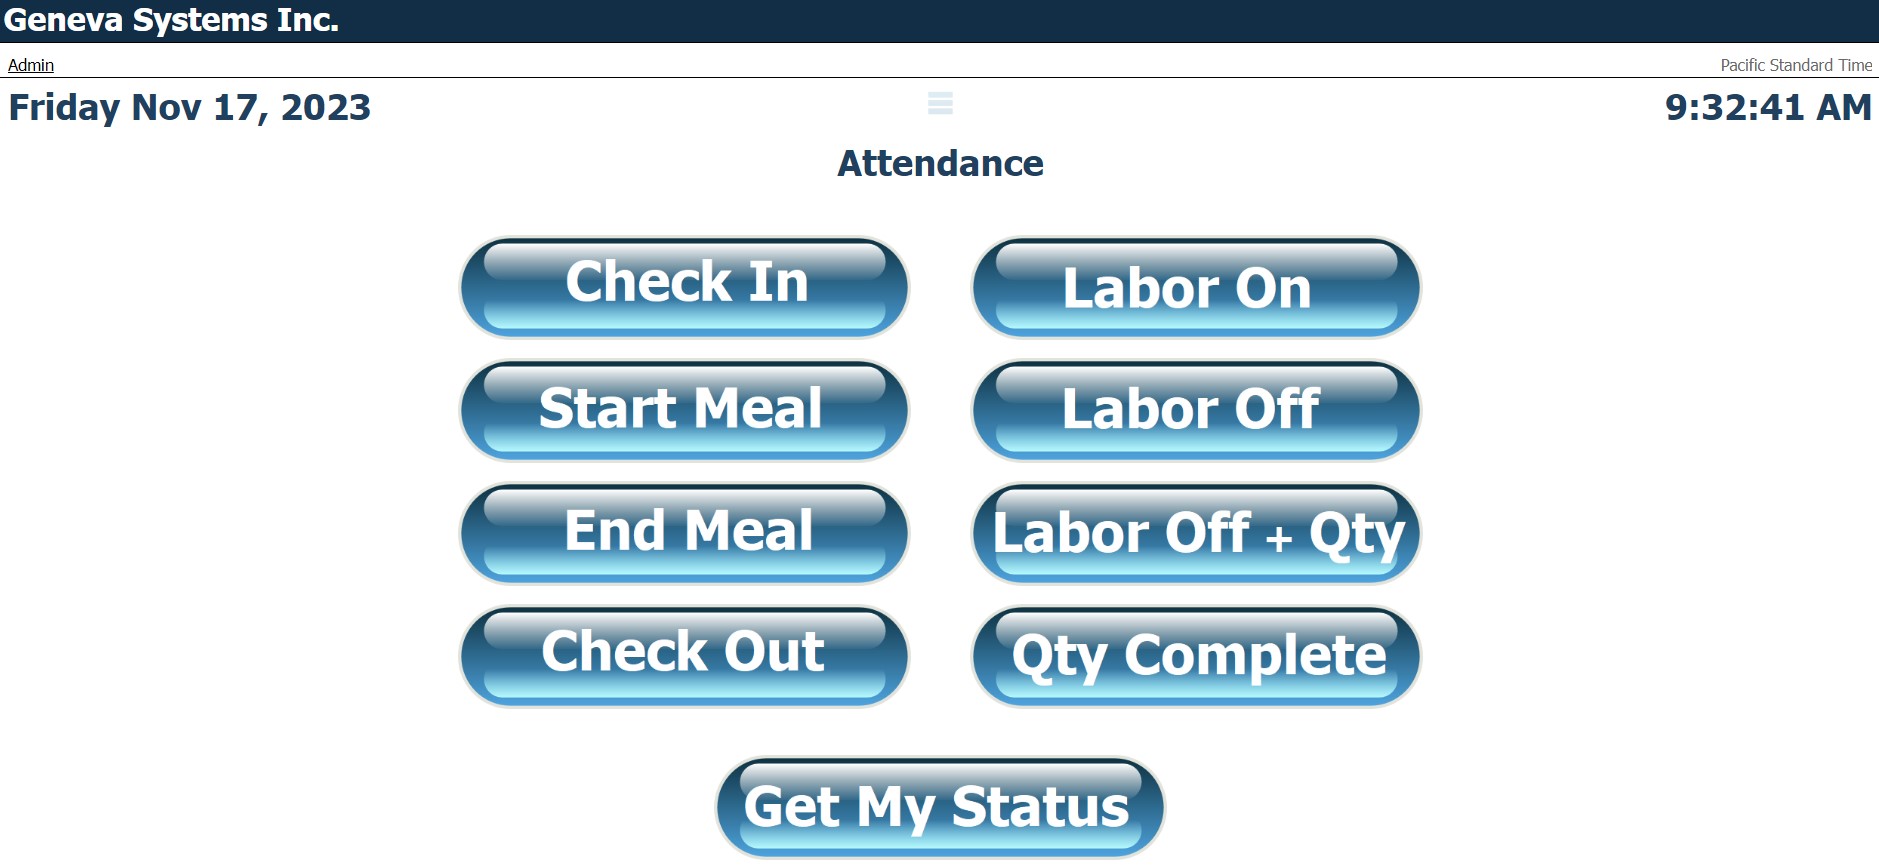 Employee Attendance Capturing Console